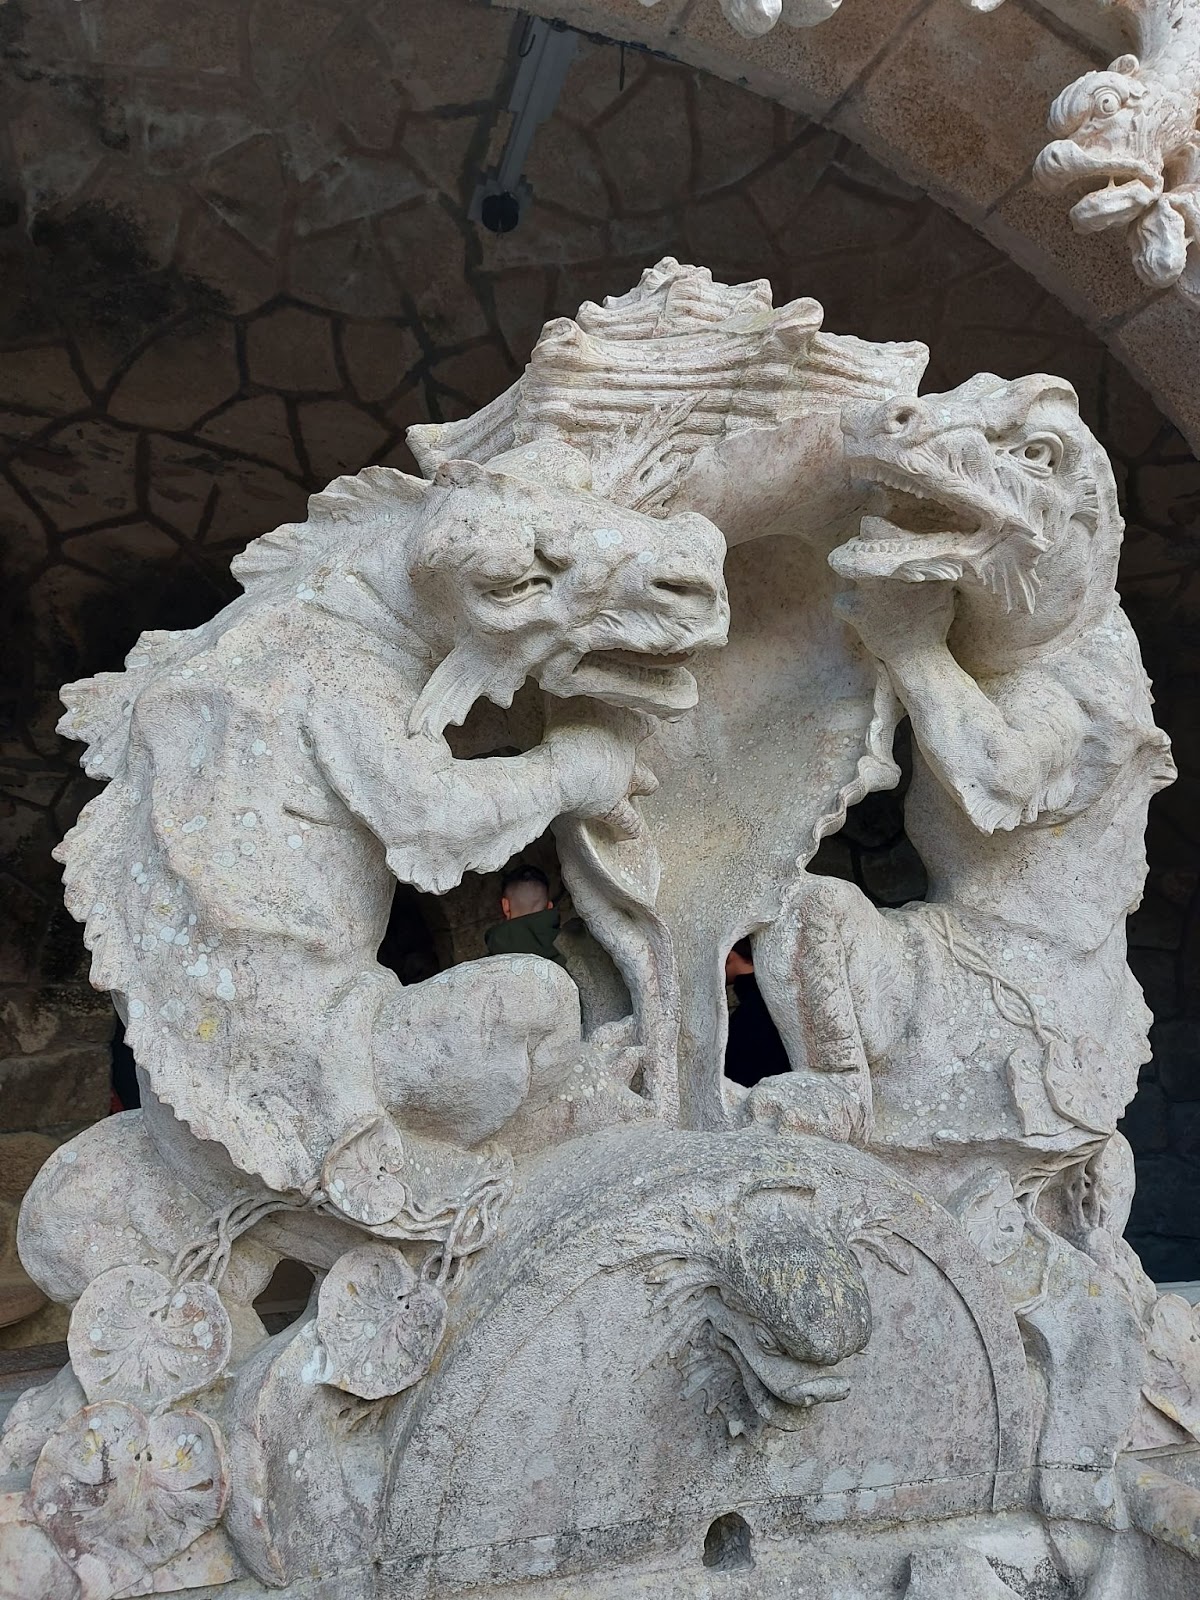 Reptilian sculptures in Quinta da Regaleira